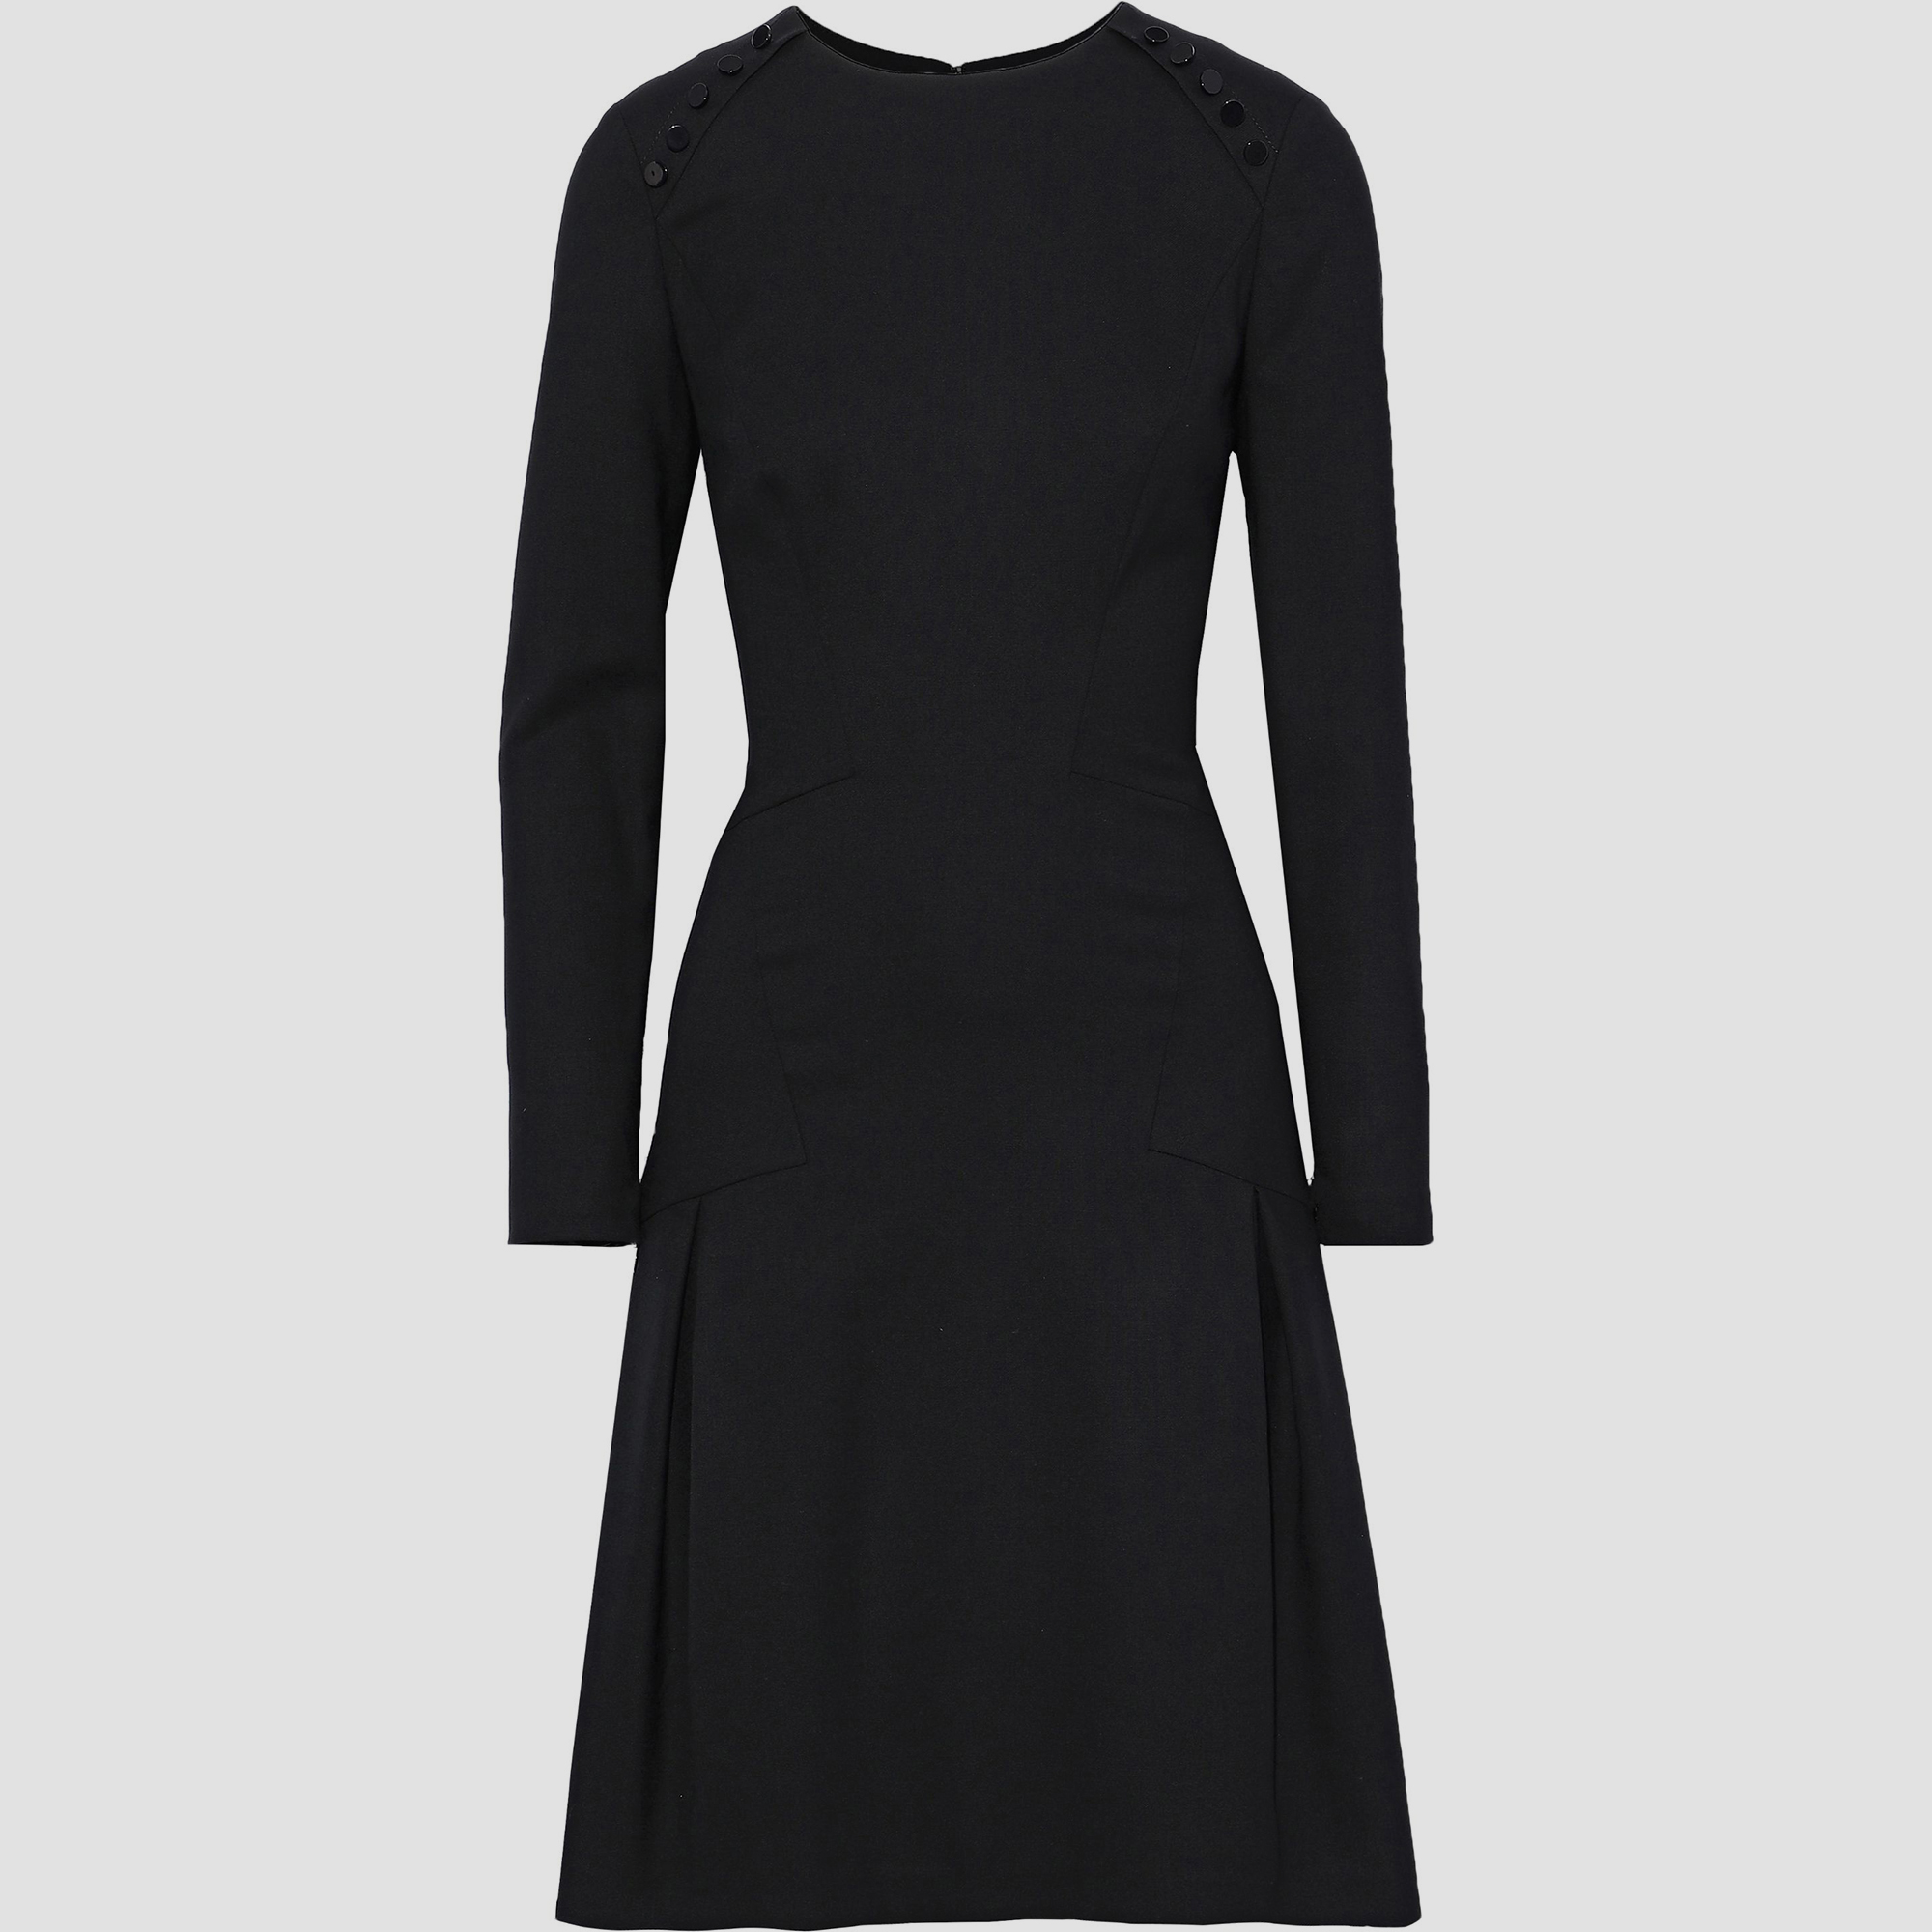 Carolina herrera virgin wool knee length dress 10